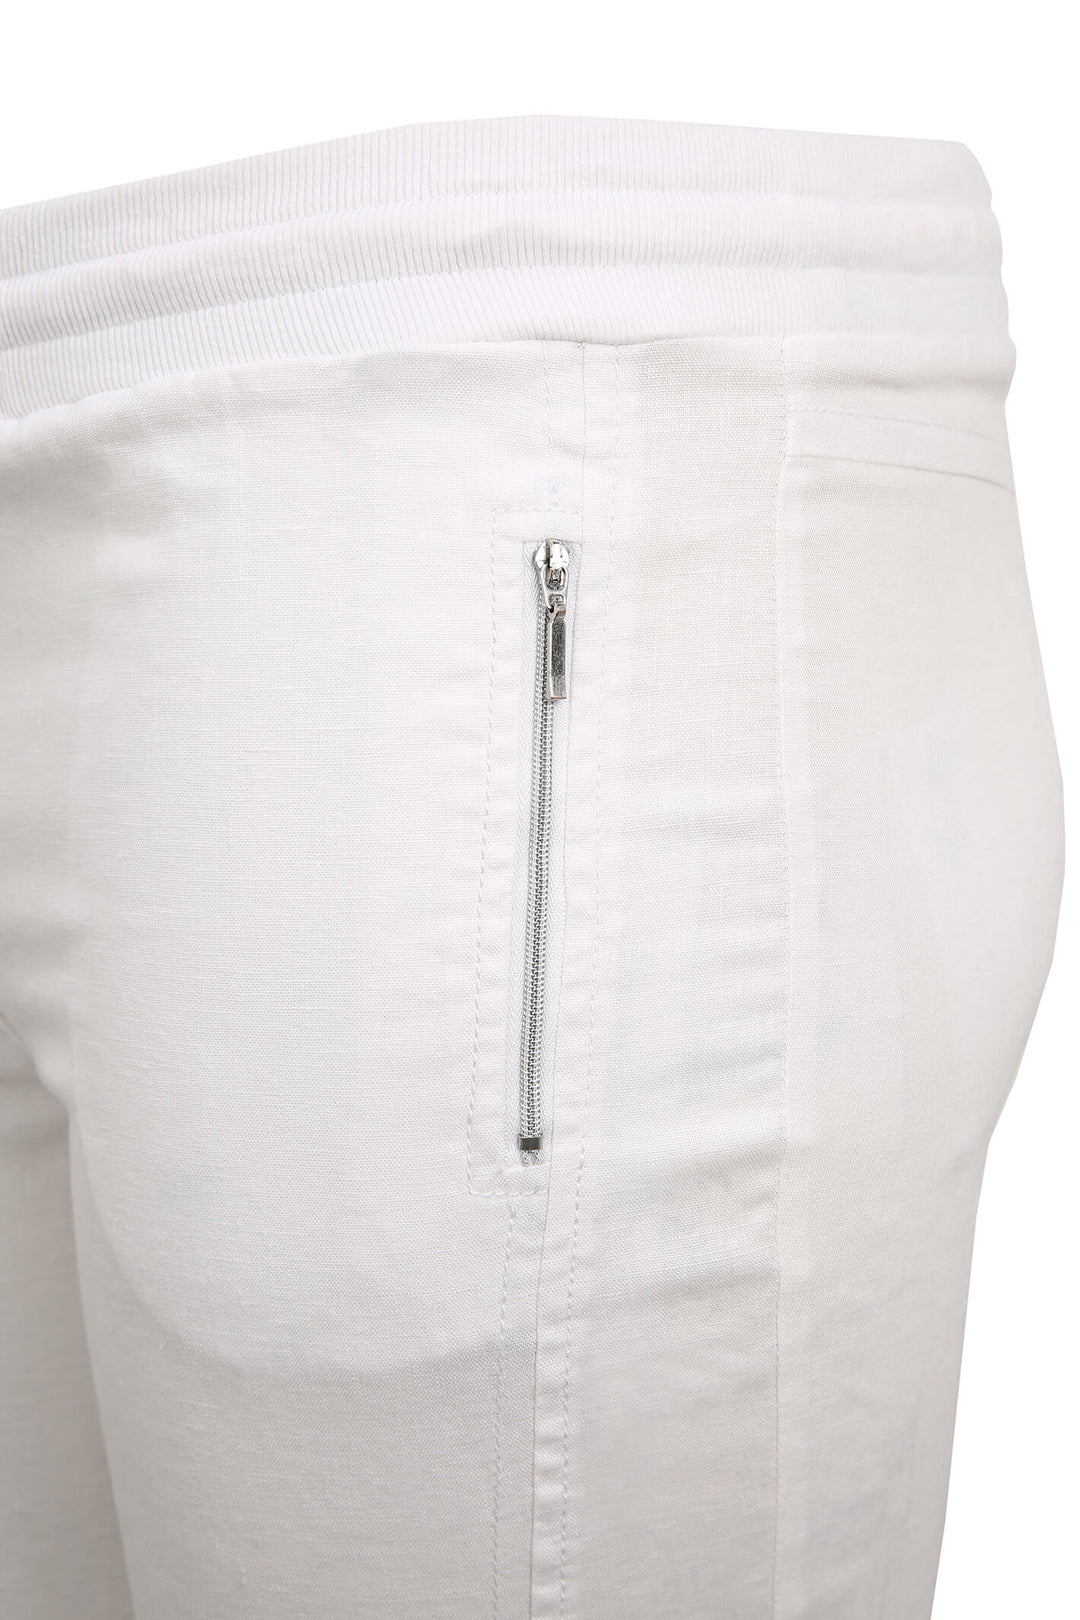 Doris Streich  854 135 White Linen Full Length Trousers - Shirley Allum Boutique